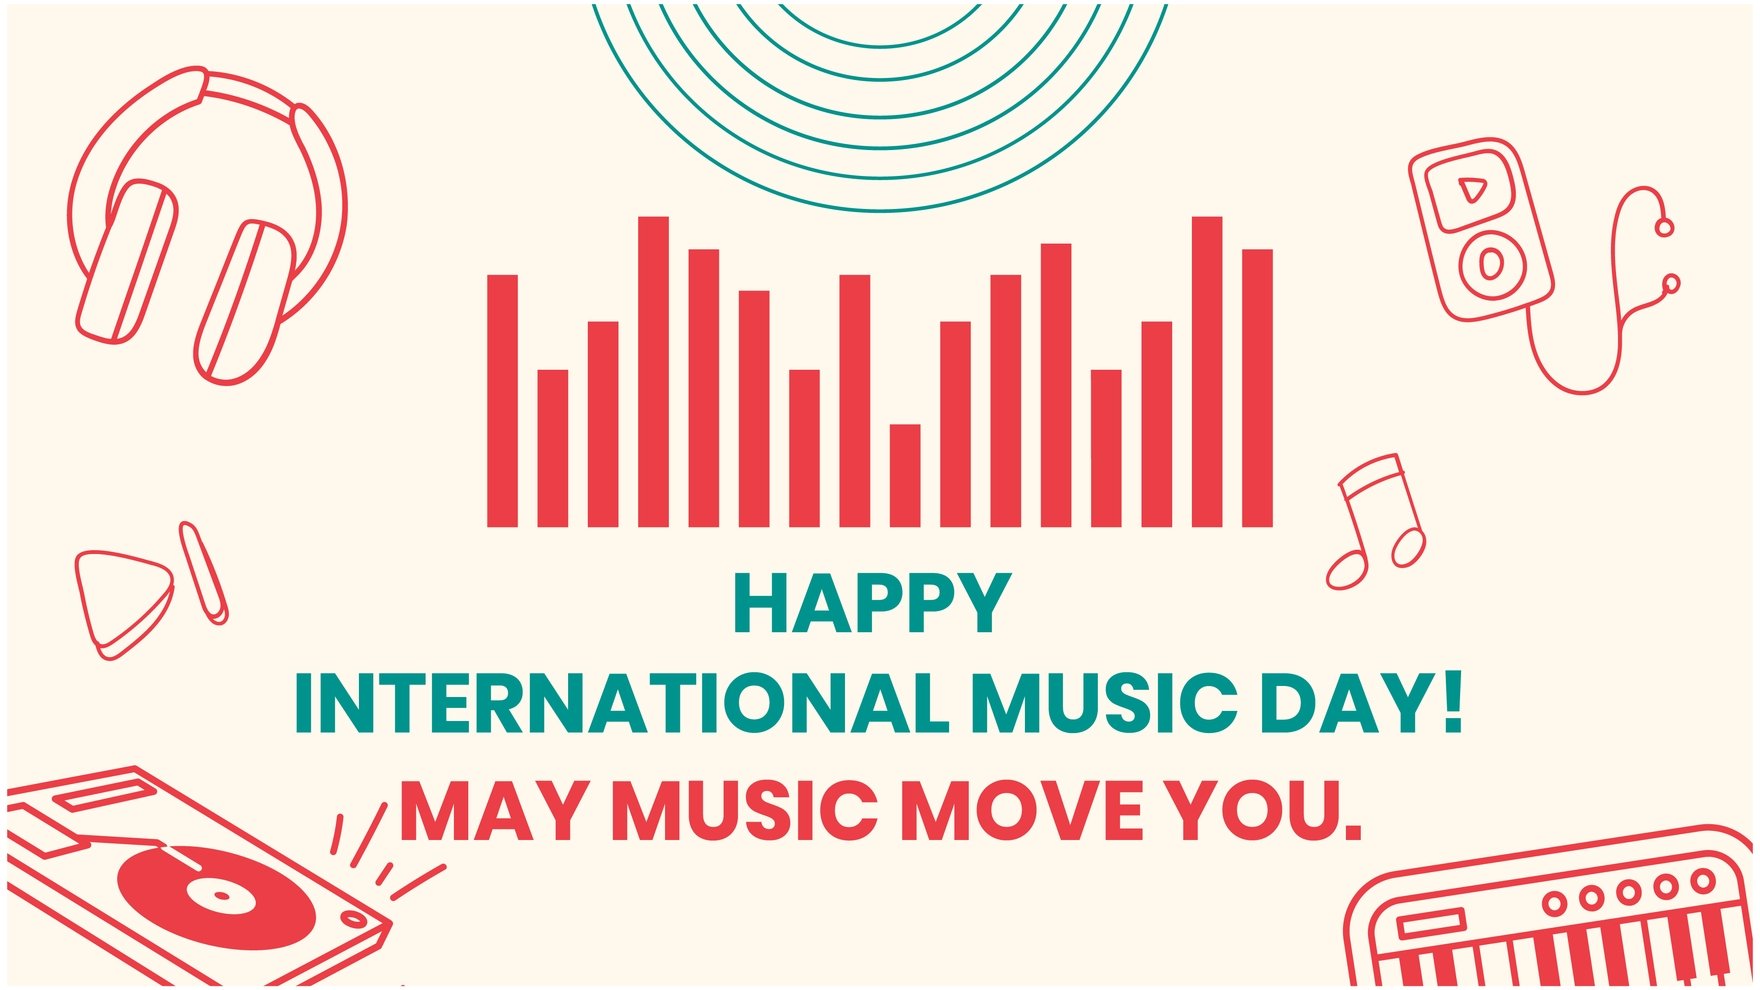 International Music Day Greeting Card Background